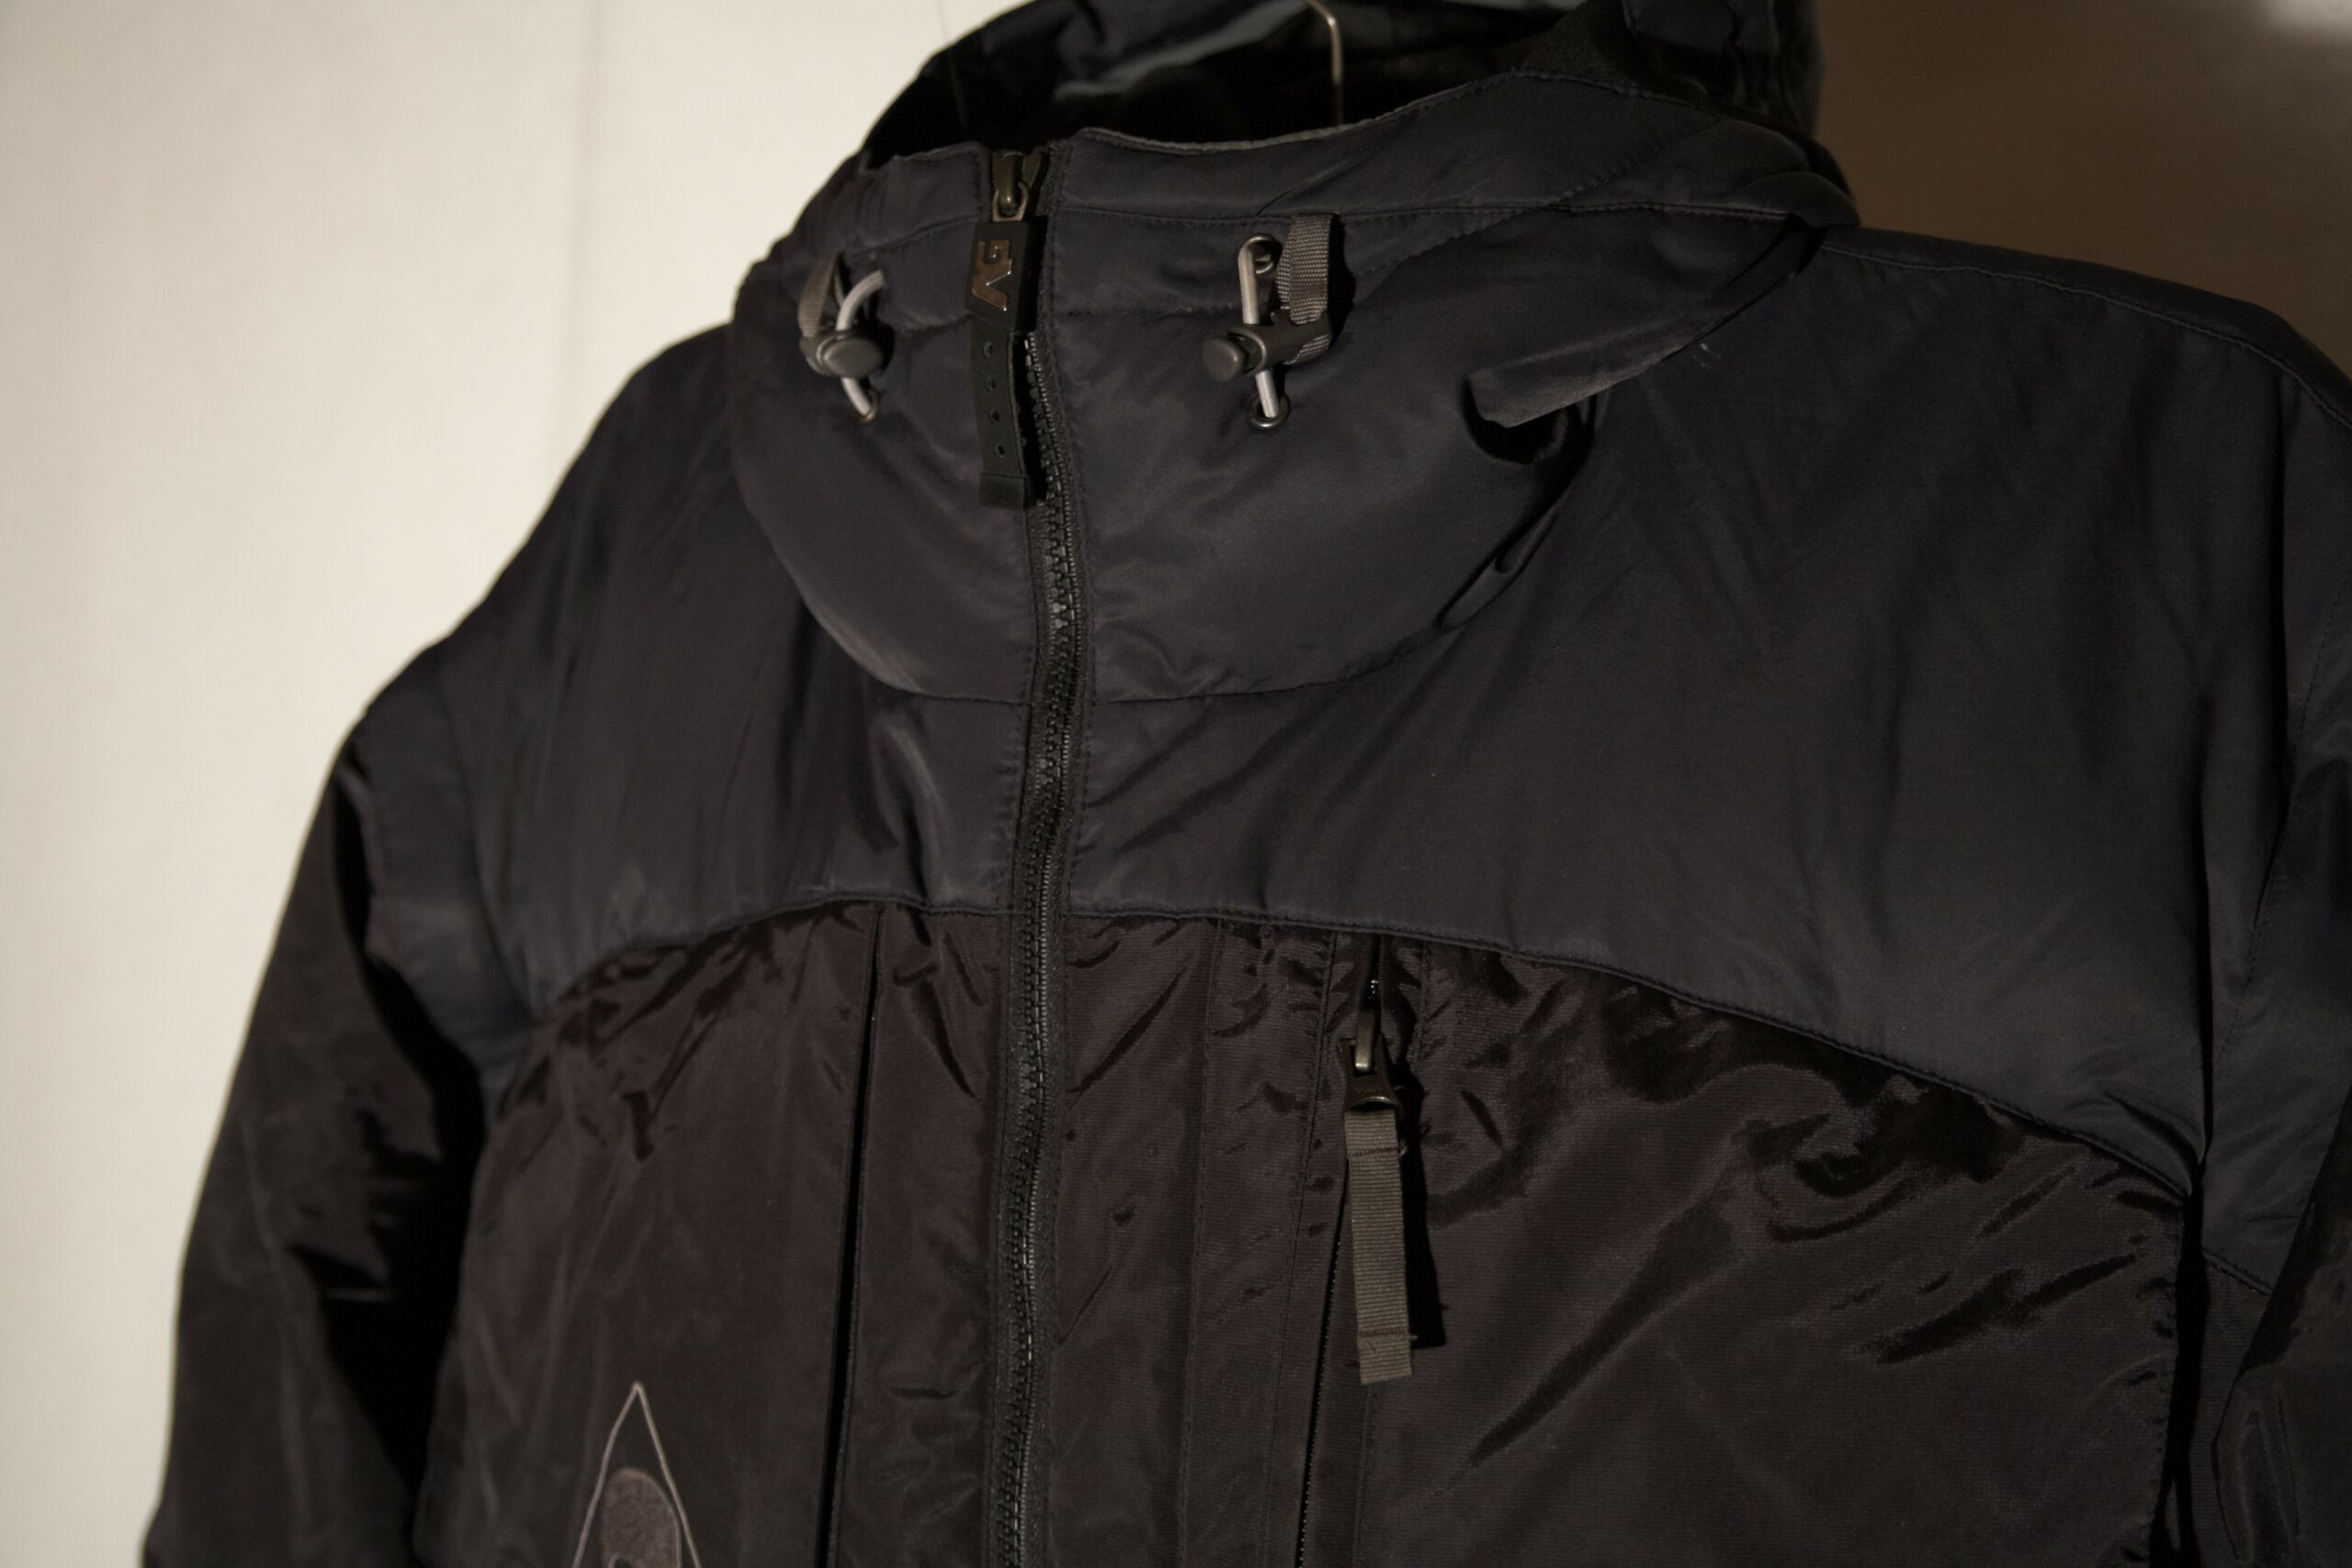 Analog Puffy Jacket or Vest - Size L - Black & Dark Blue